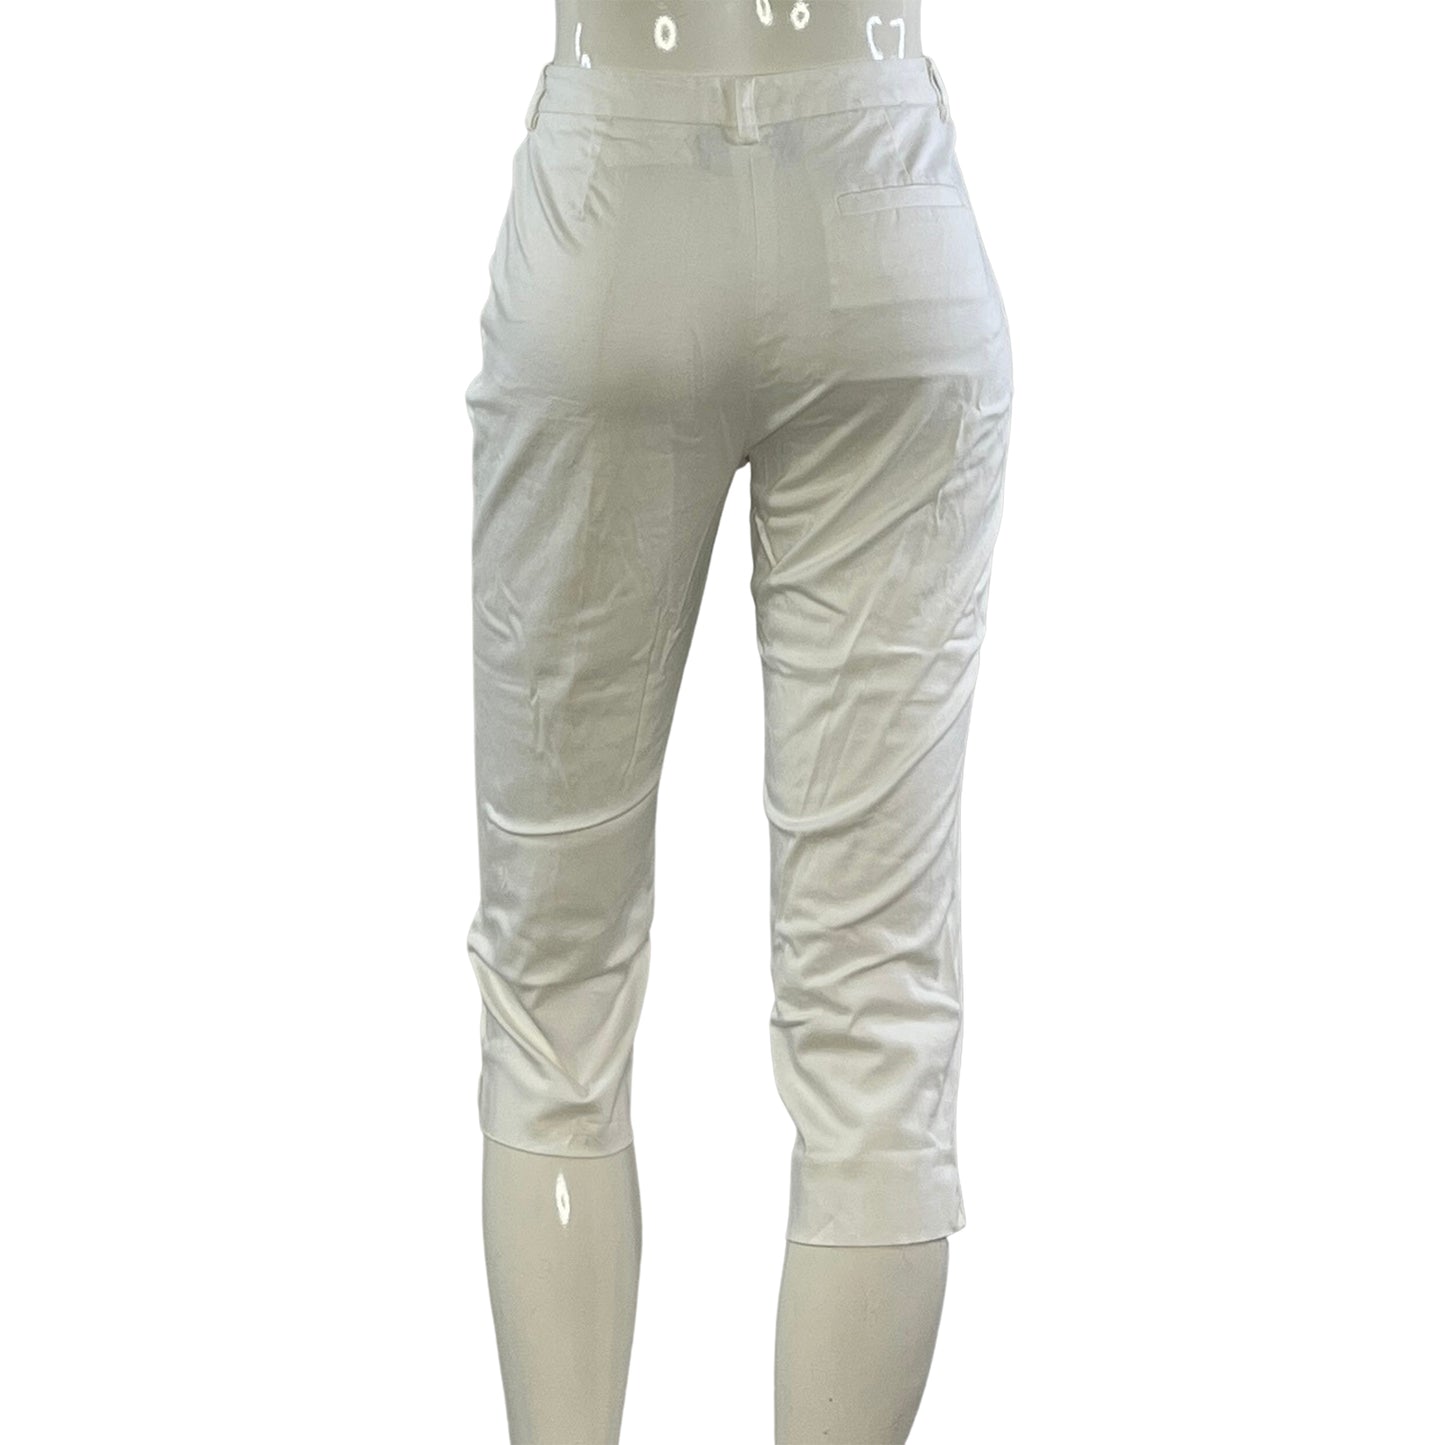 Jones New York Capri Pants White Size 6P SKU 000415